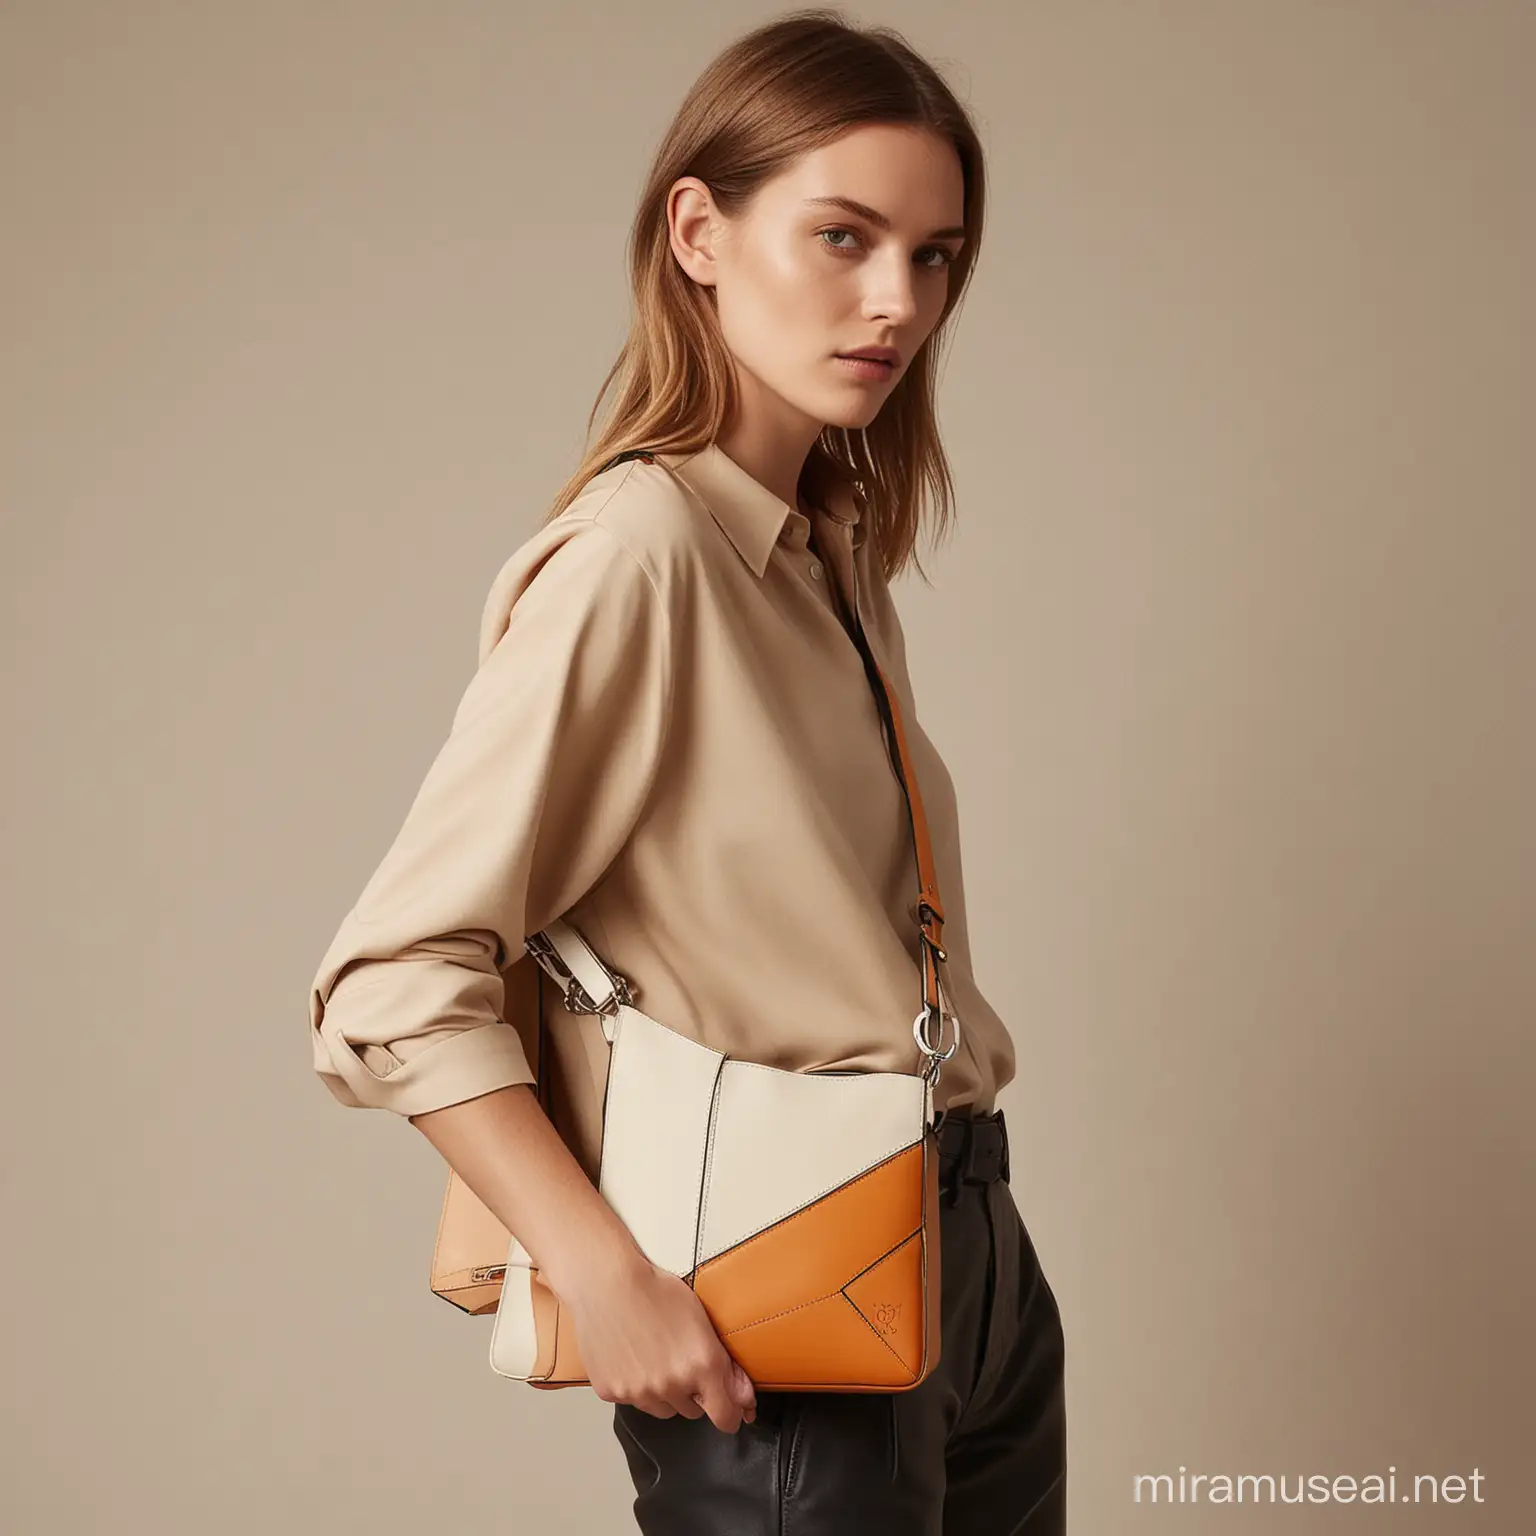 Bauhaus Inspired Puzzle Bags Versatile Elegance for Women